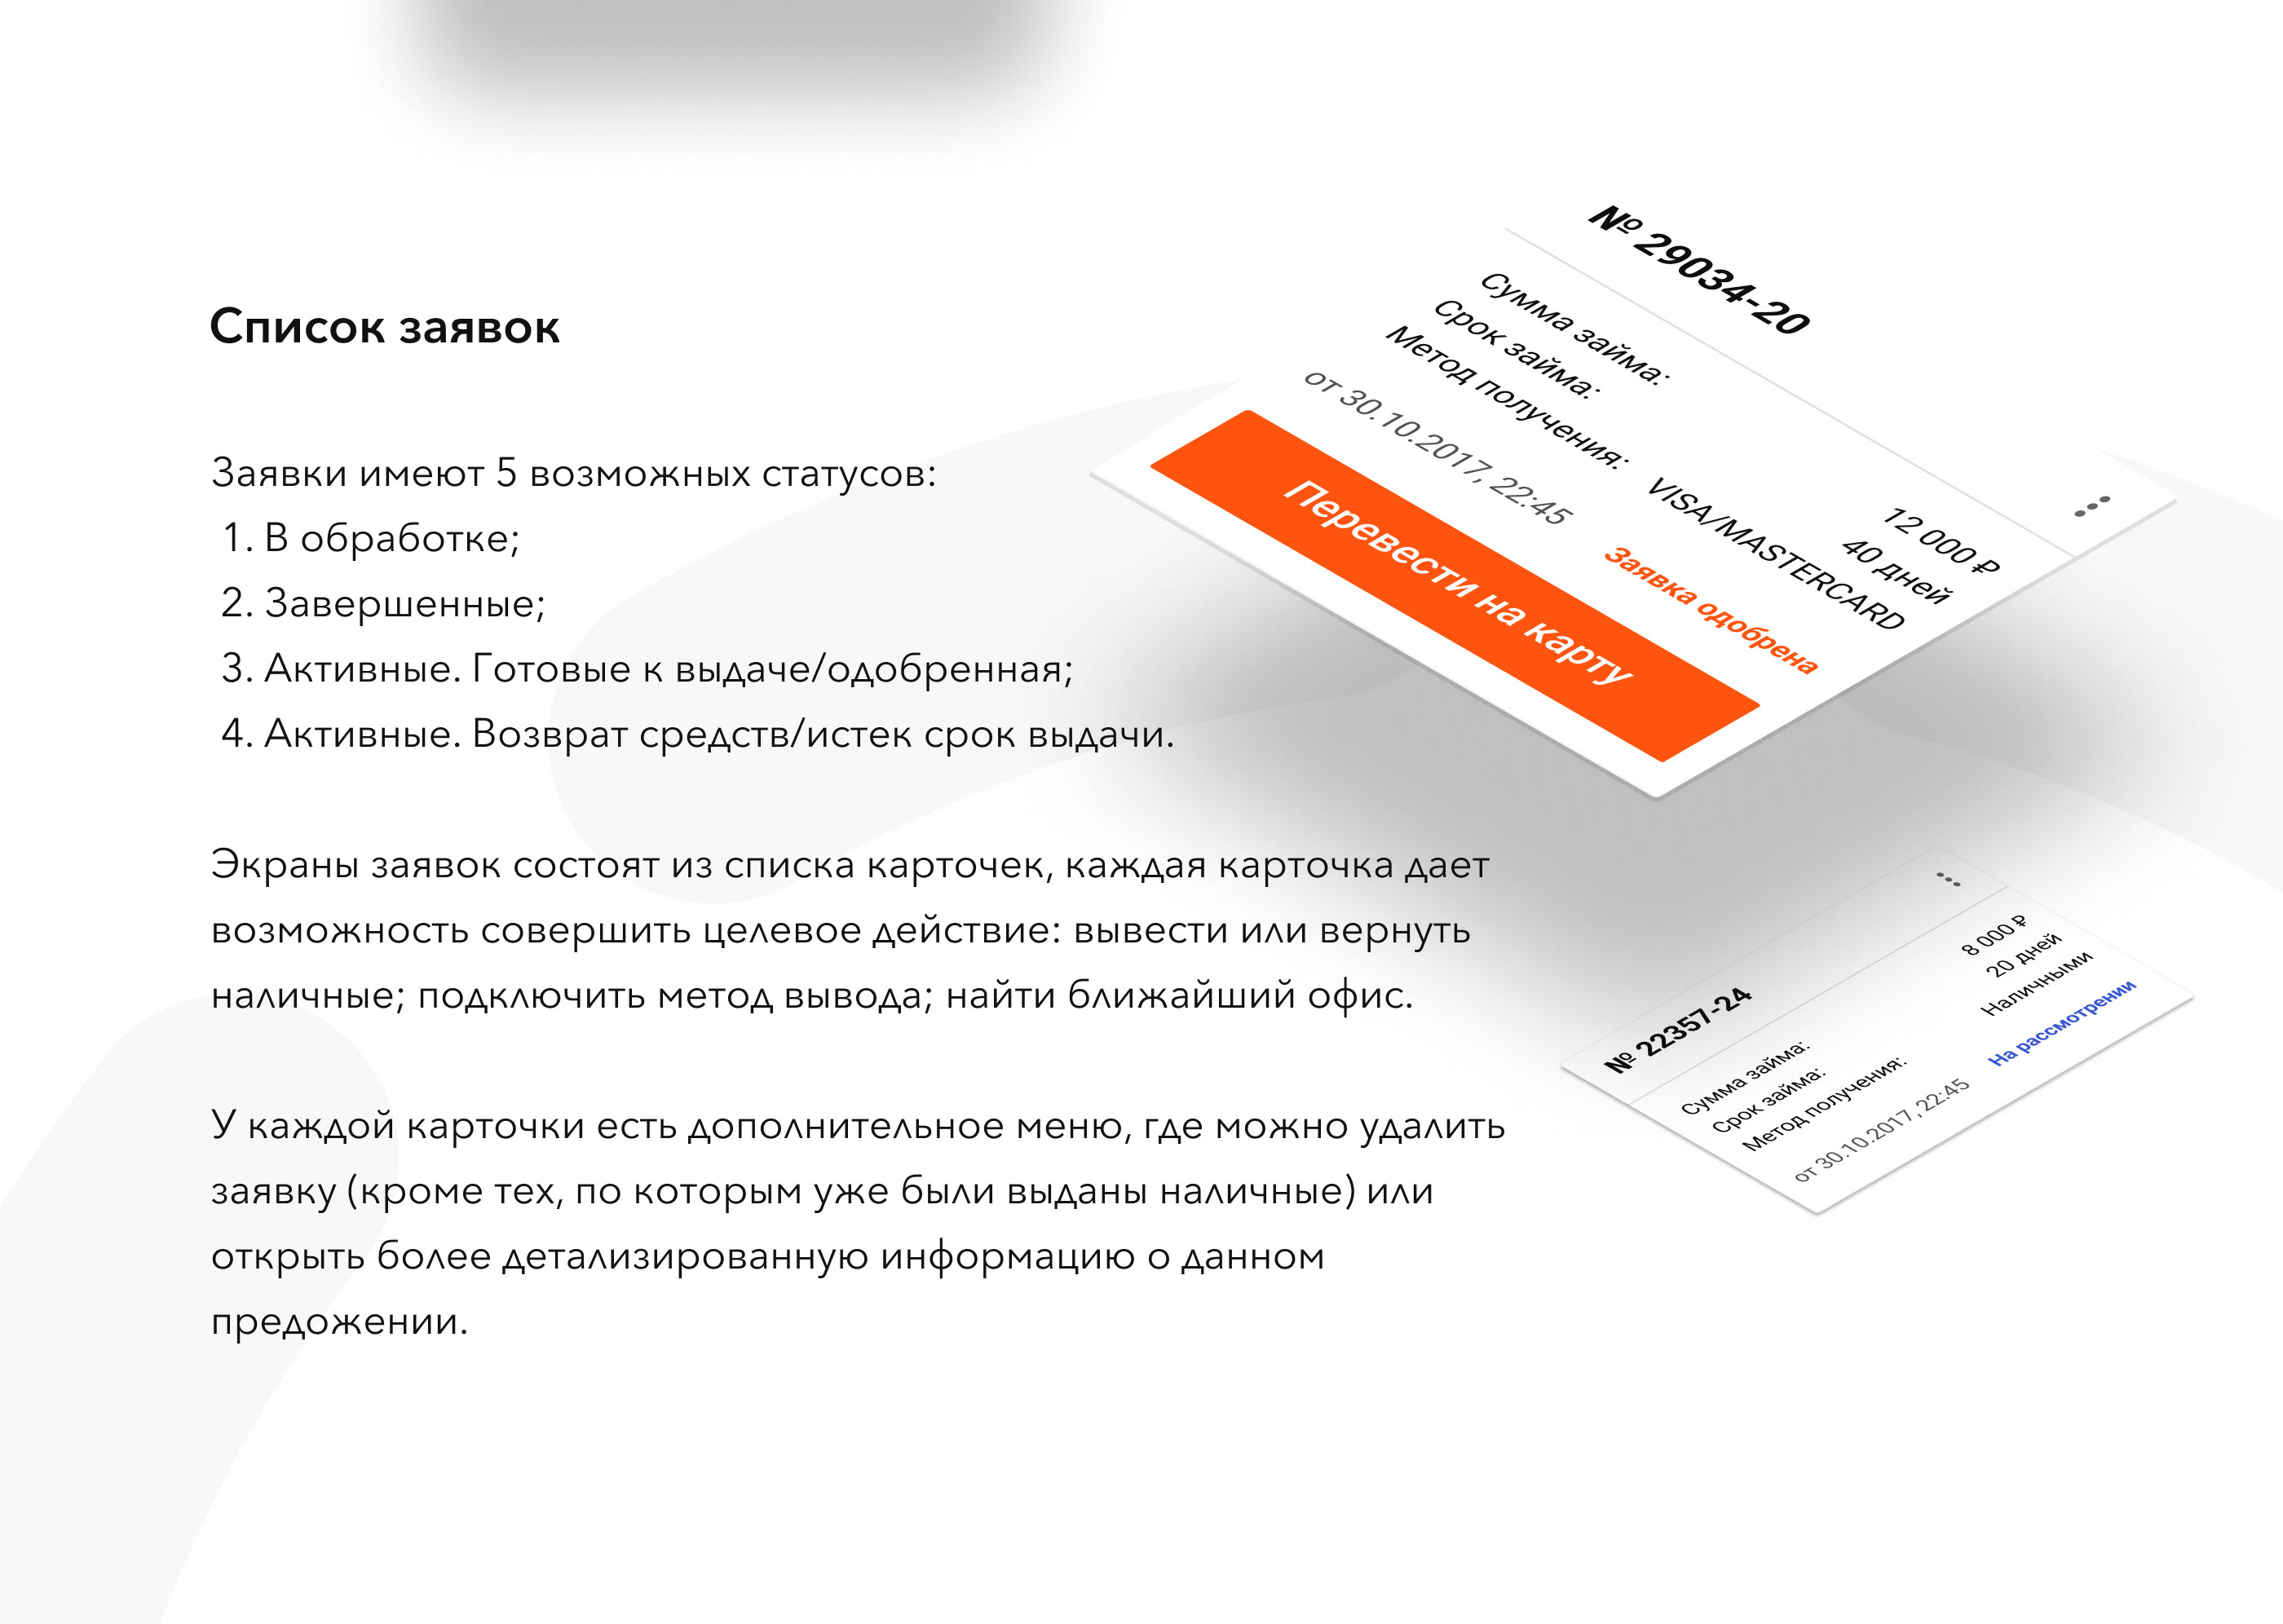 Microloans App (UI concept) — Изображение №15 — Интерфейсы, Брендинг на Dprofile